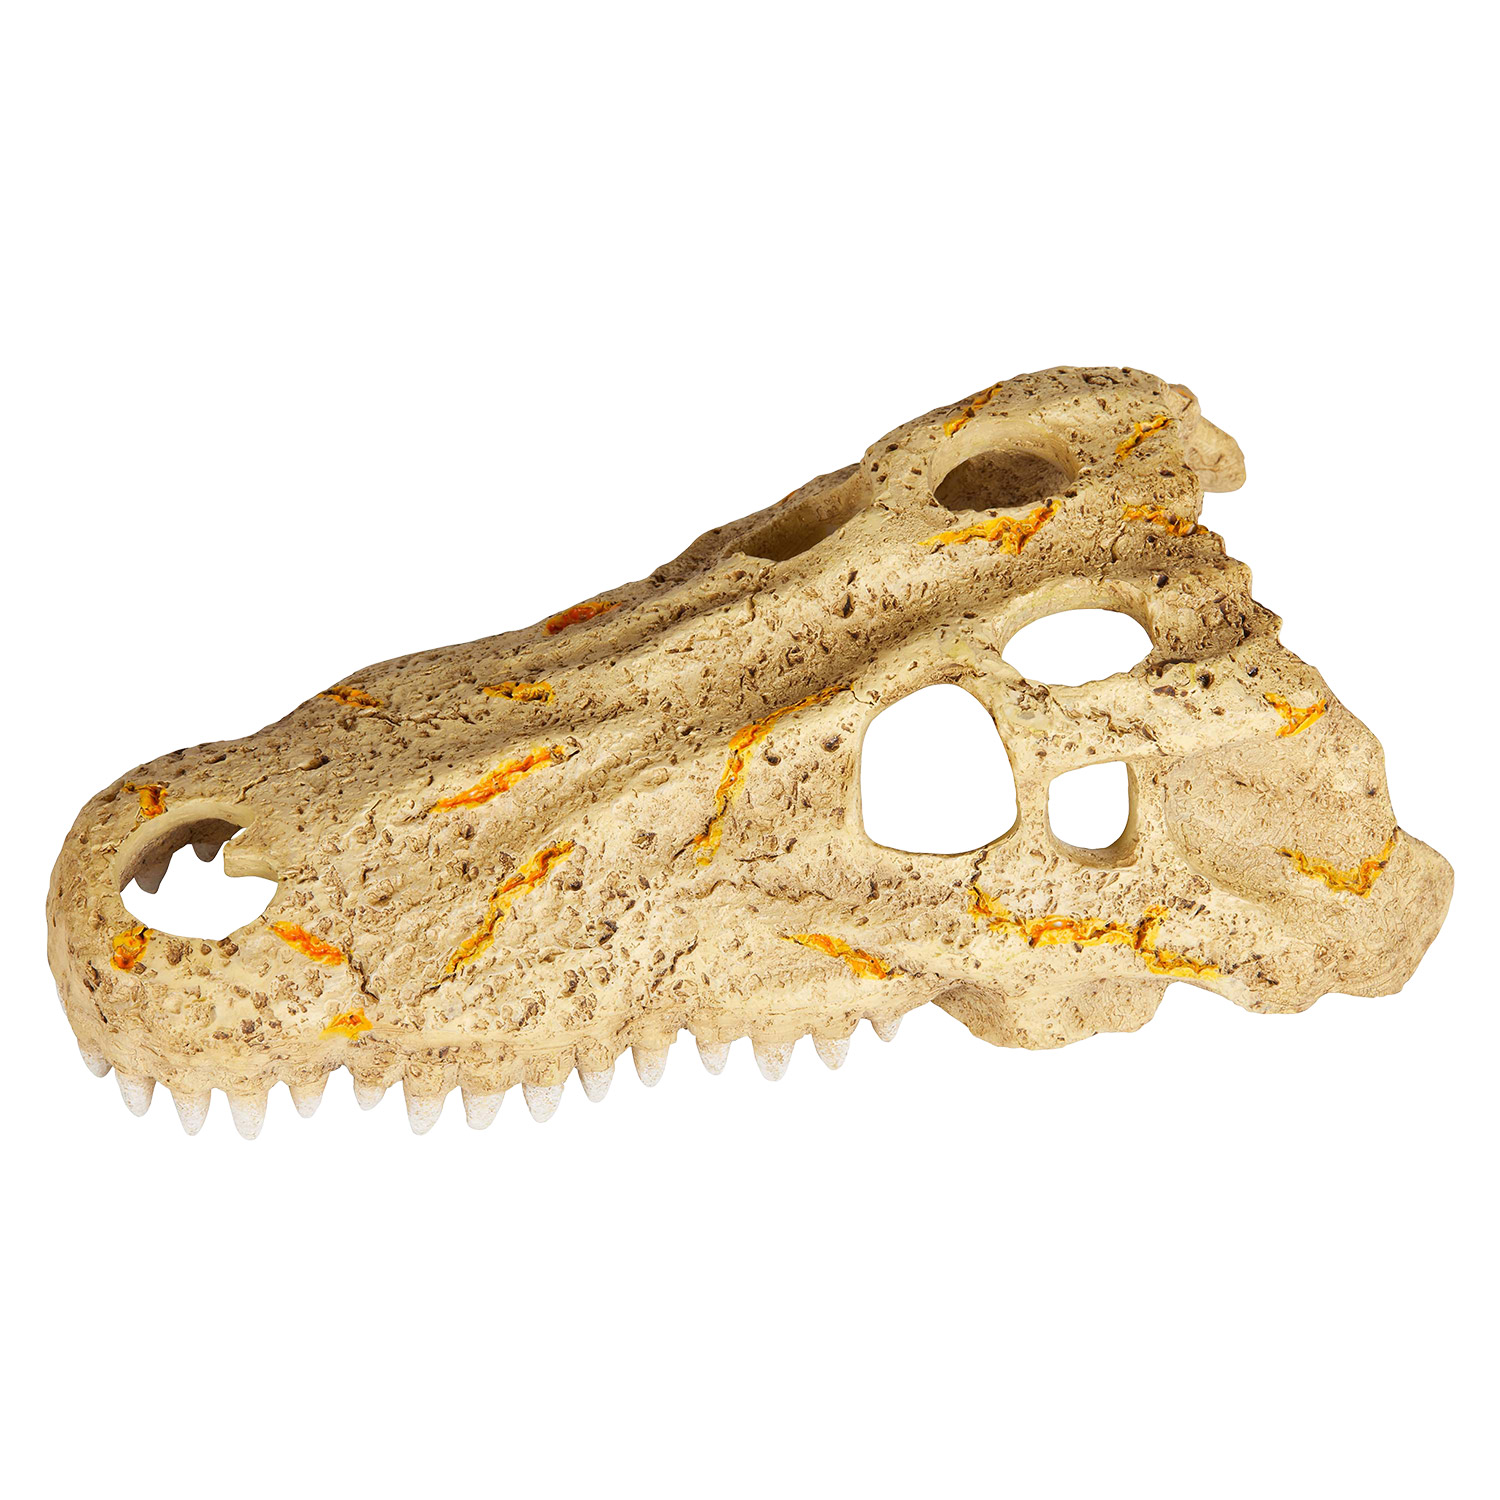 Zilla Crâne de Crocodile - Moyen - Rapid Sense Decor - Crocodile Skull - Medium